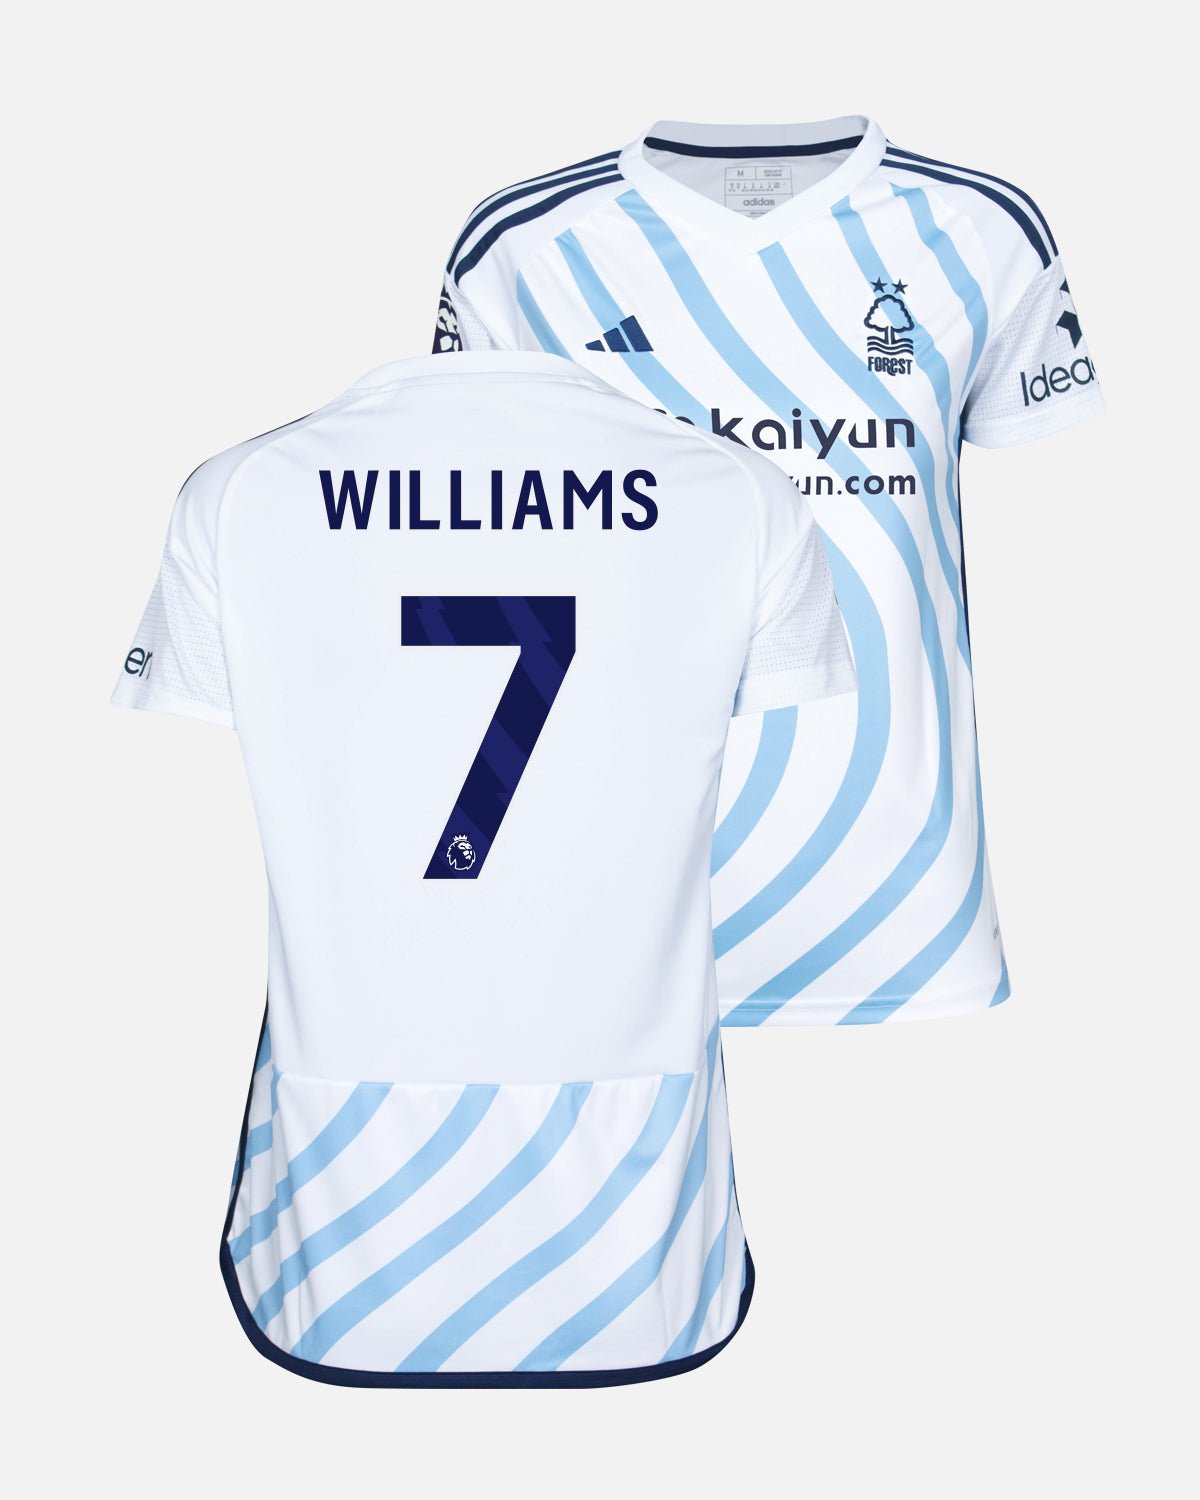 NFFC Women's Away Shirt 23-24 - Williams 7 - Nottingham Forest FC